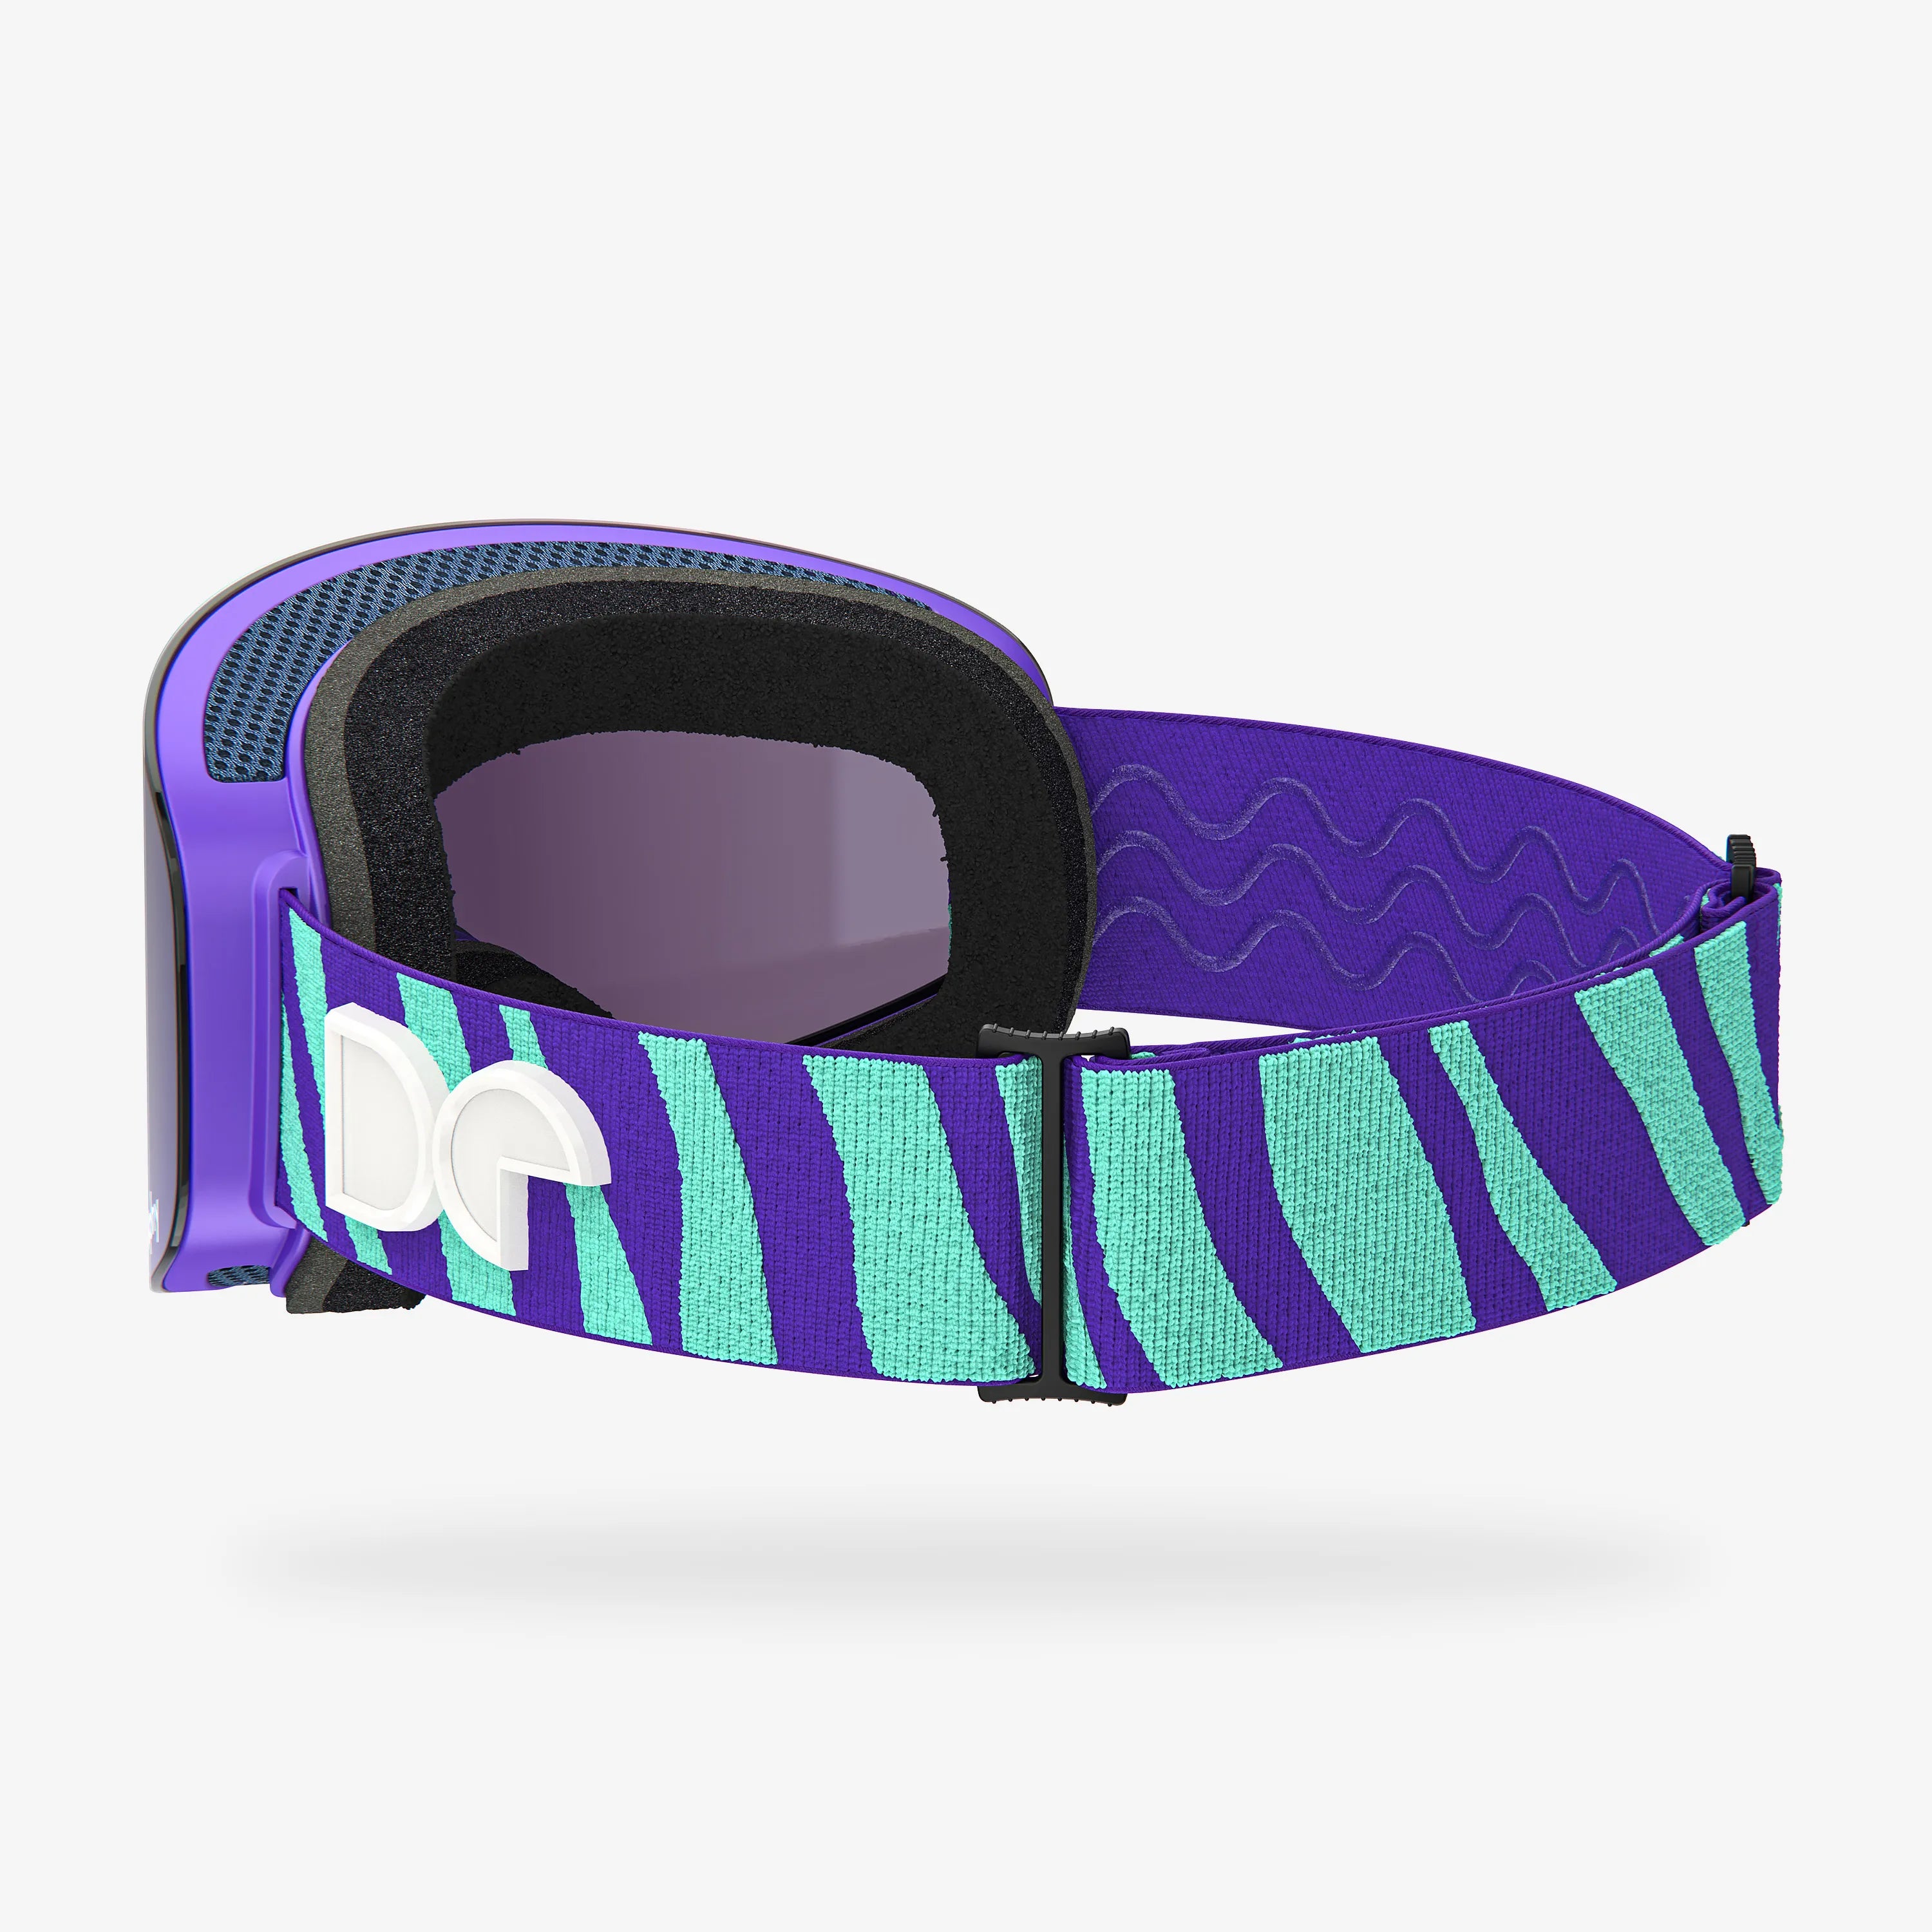 Defender 1000 Lavender Ski Goggle